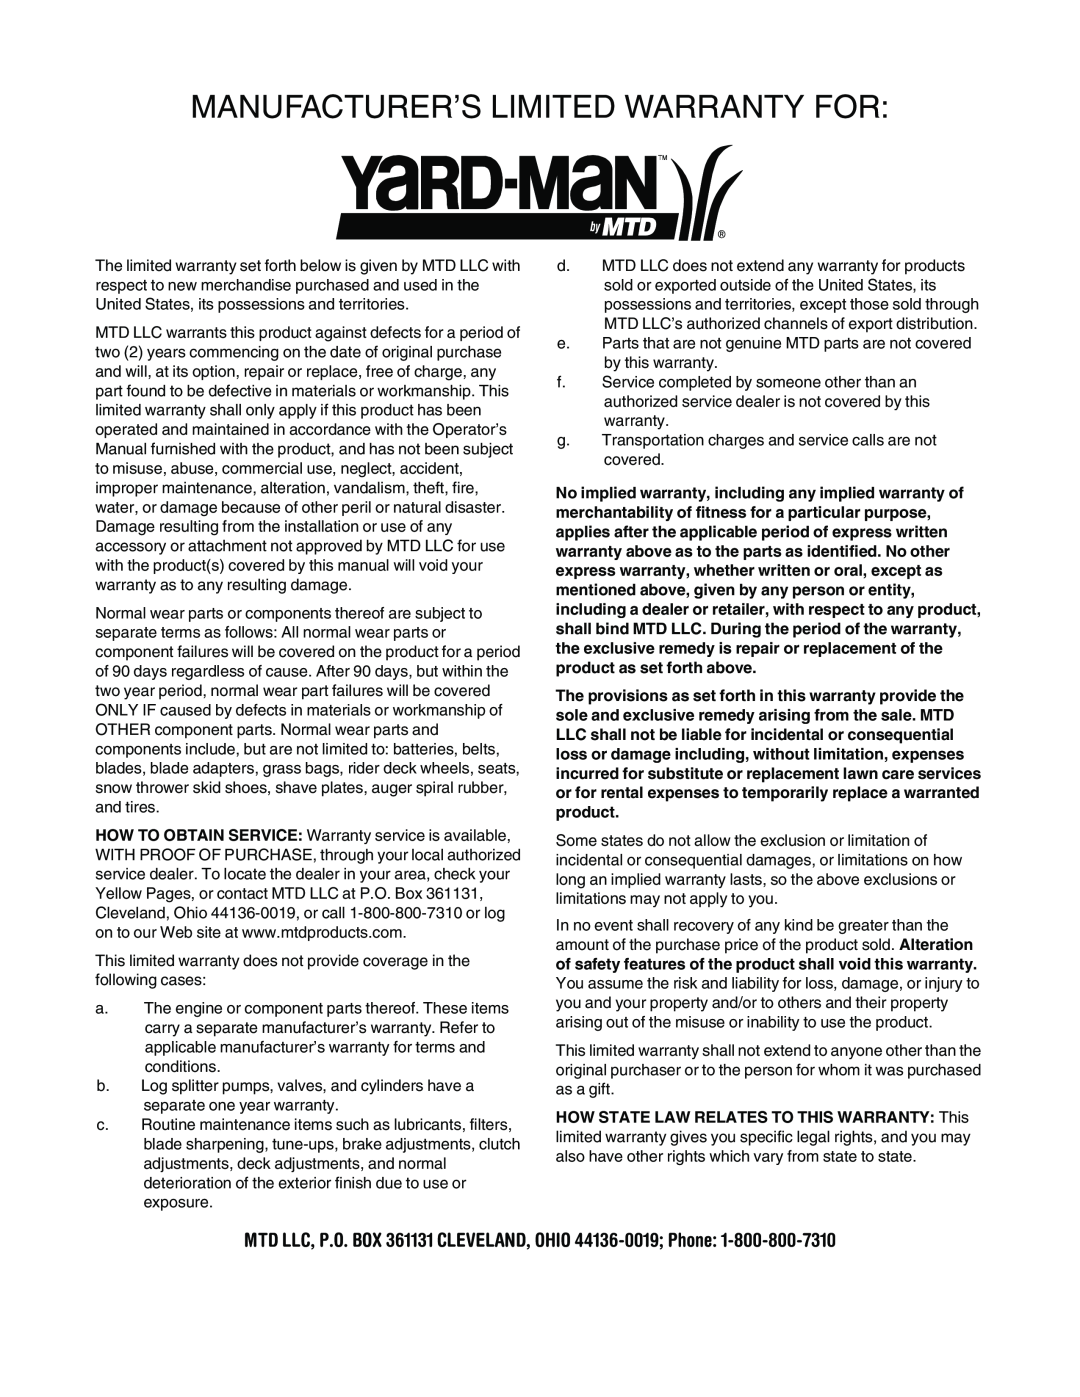 Yard-Man 107 manual Manufacturer’S Limited Warranty For 